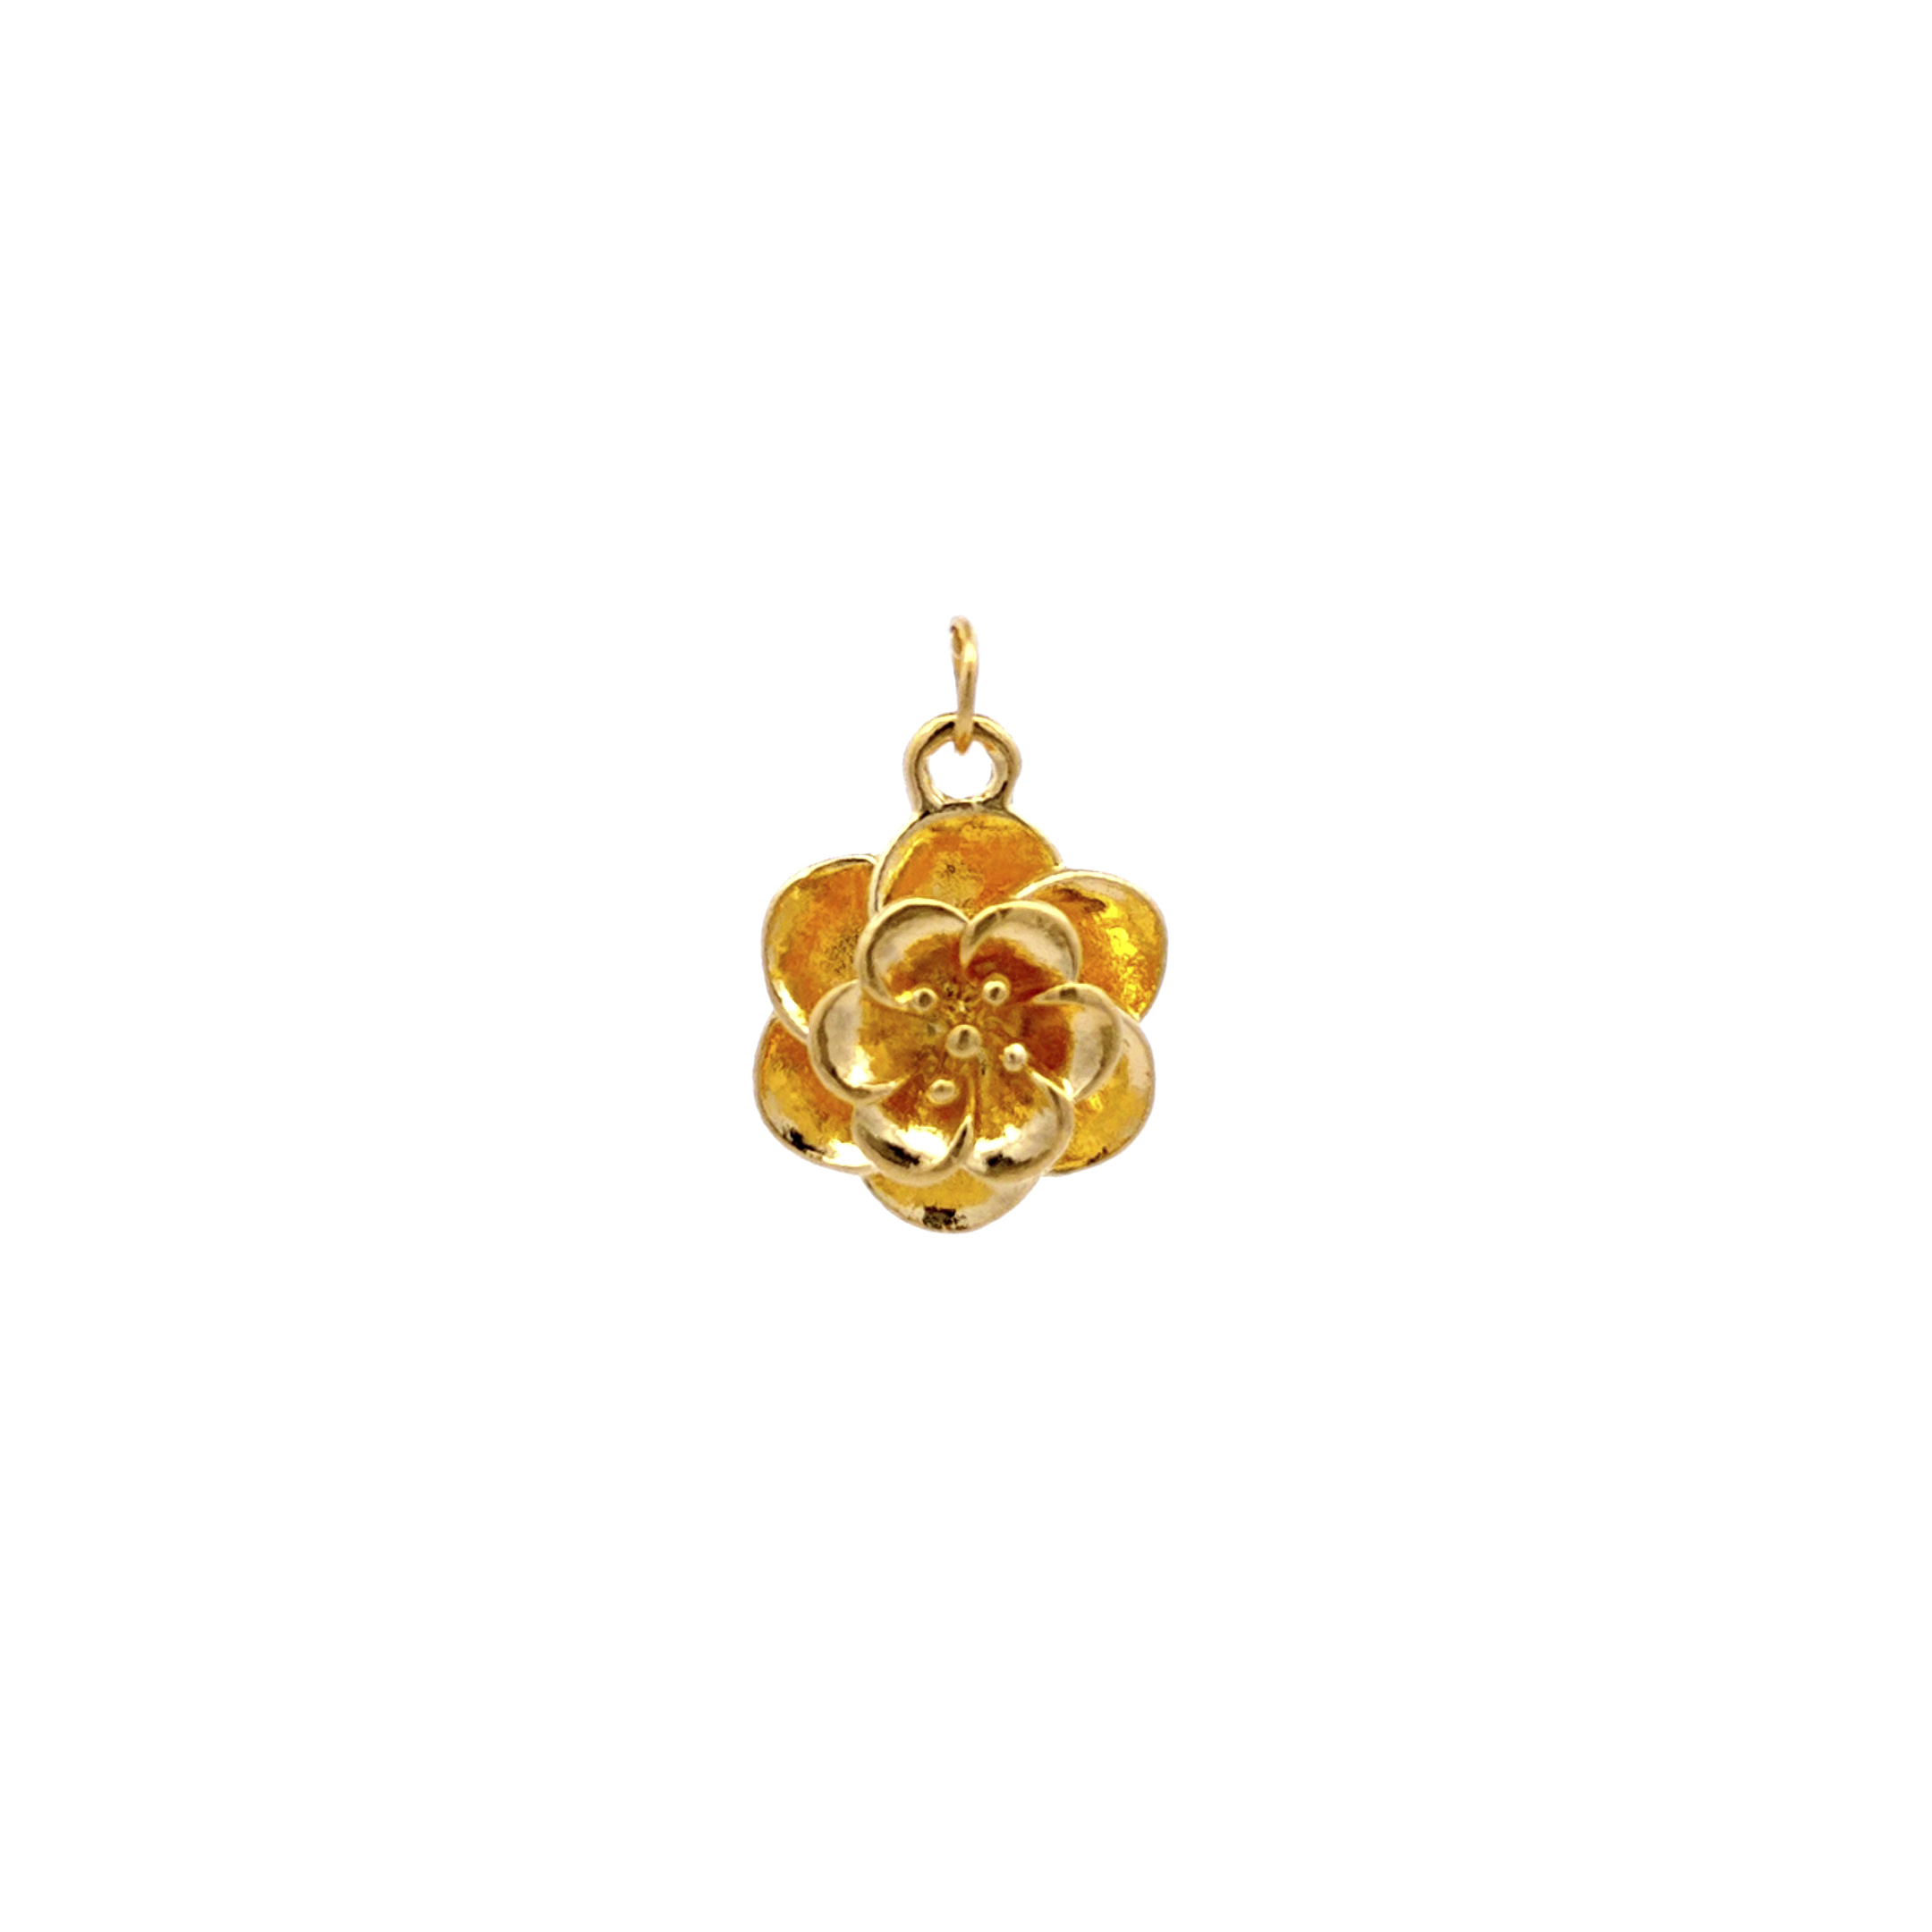 TIANSI 999 (24K) Gold Flower Pendant